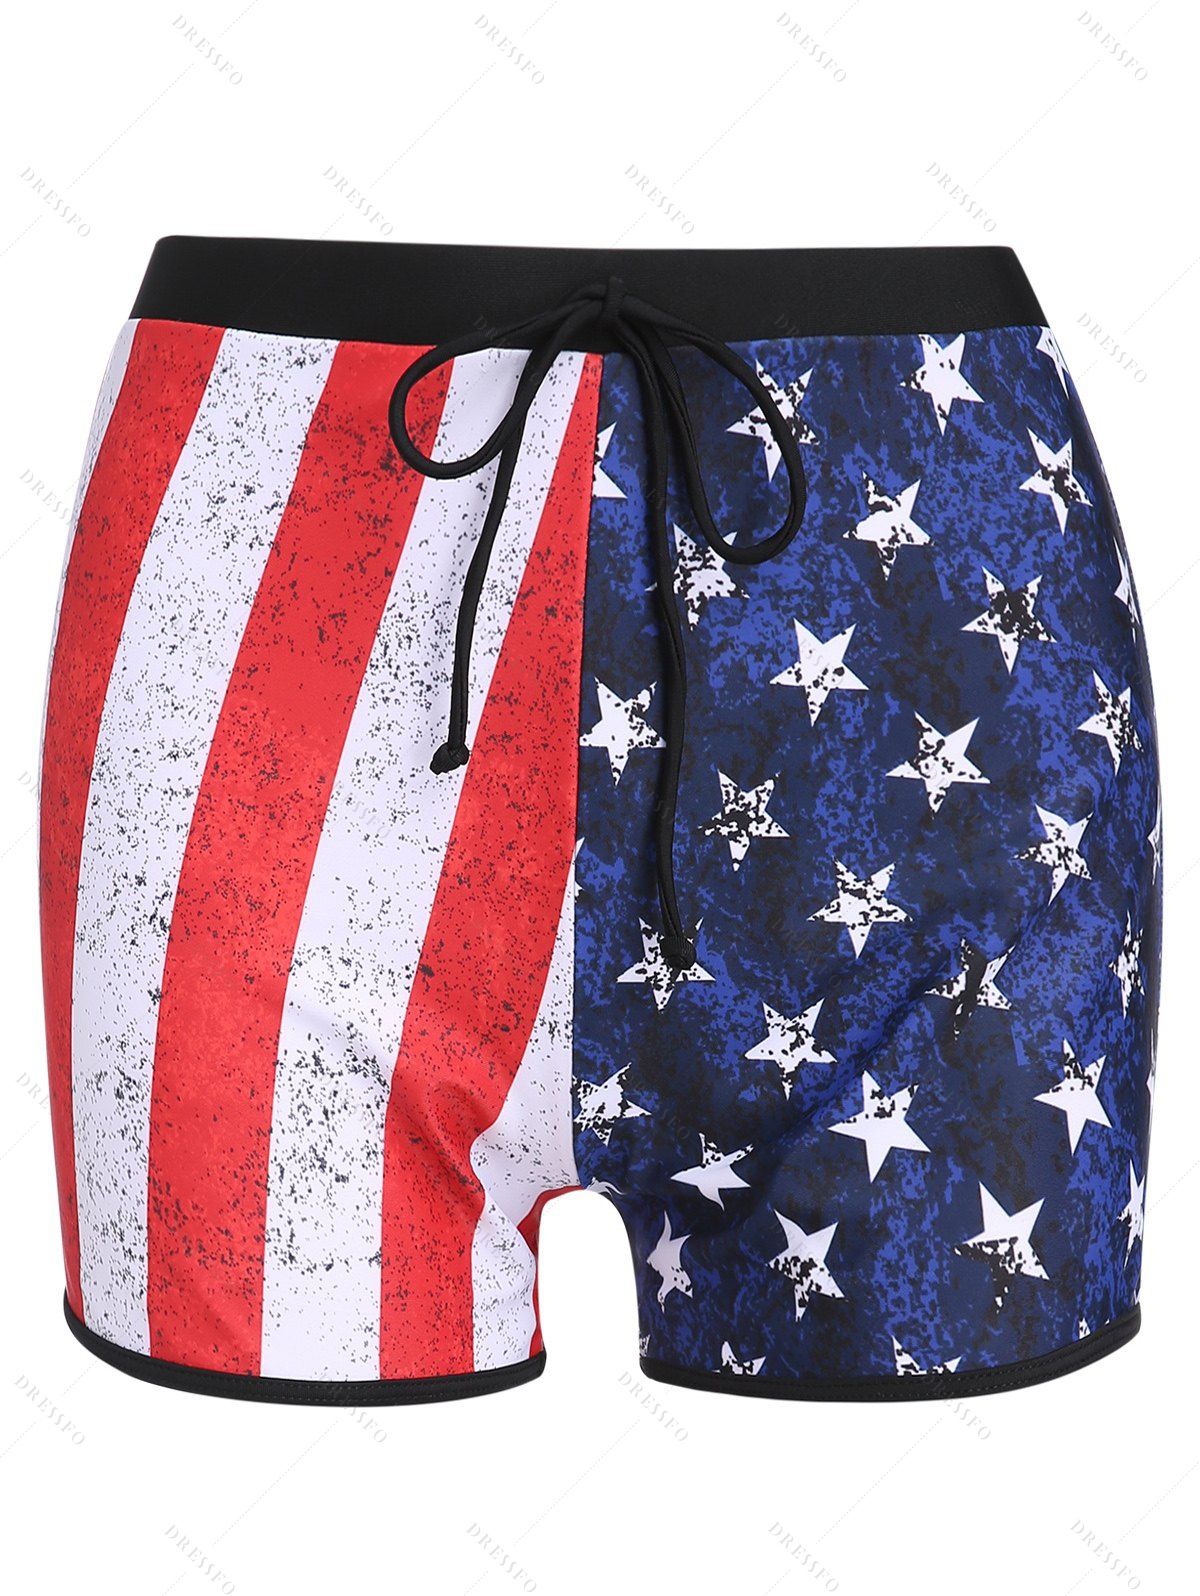 American Flag Pattern Swimsuit Boyshorts Star Striped Drawstring High Waist Tankini Bottom - BLACK M